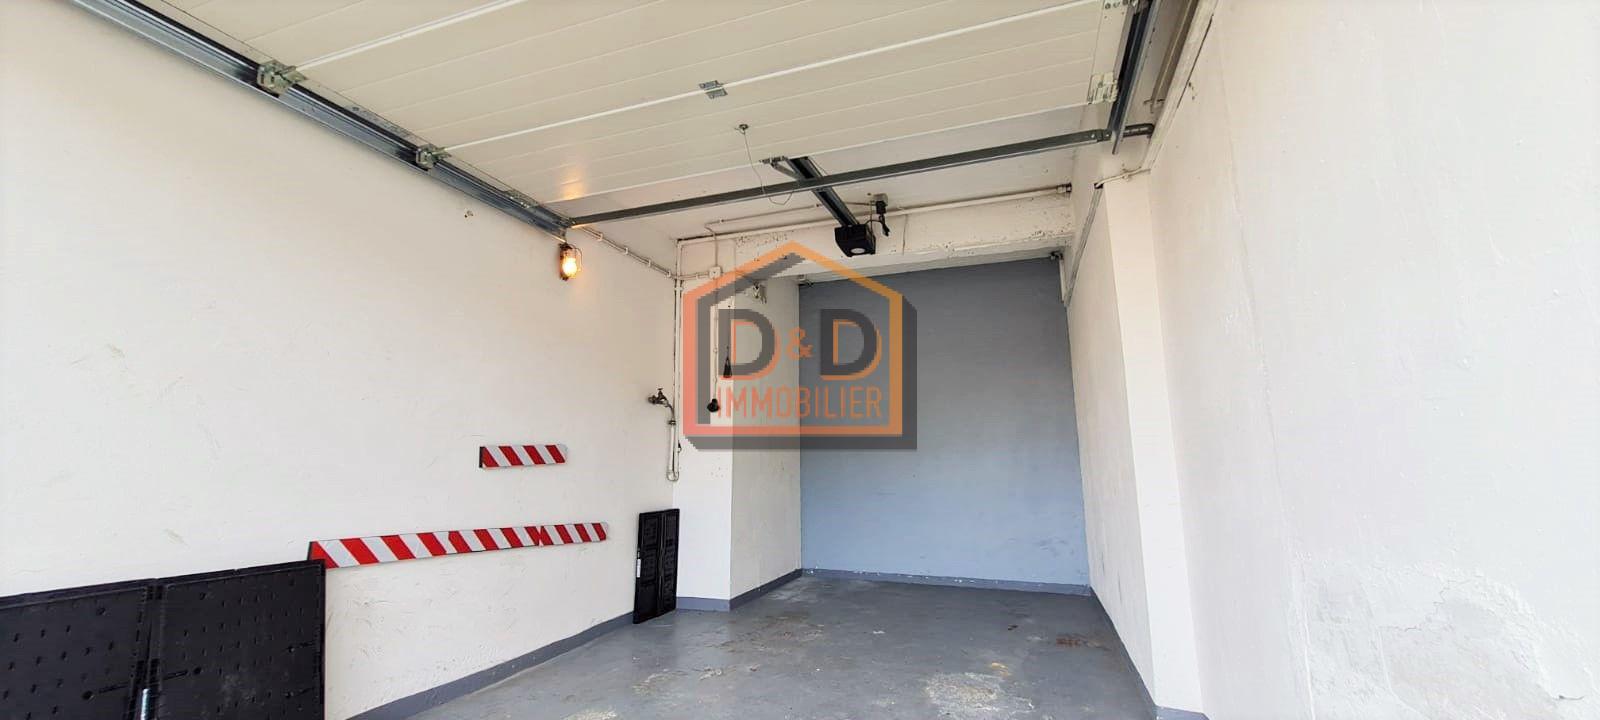 Garage à Luxembourg-Howald, 11,21 m², 1 garage, 140 €/mois